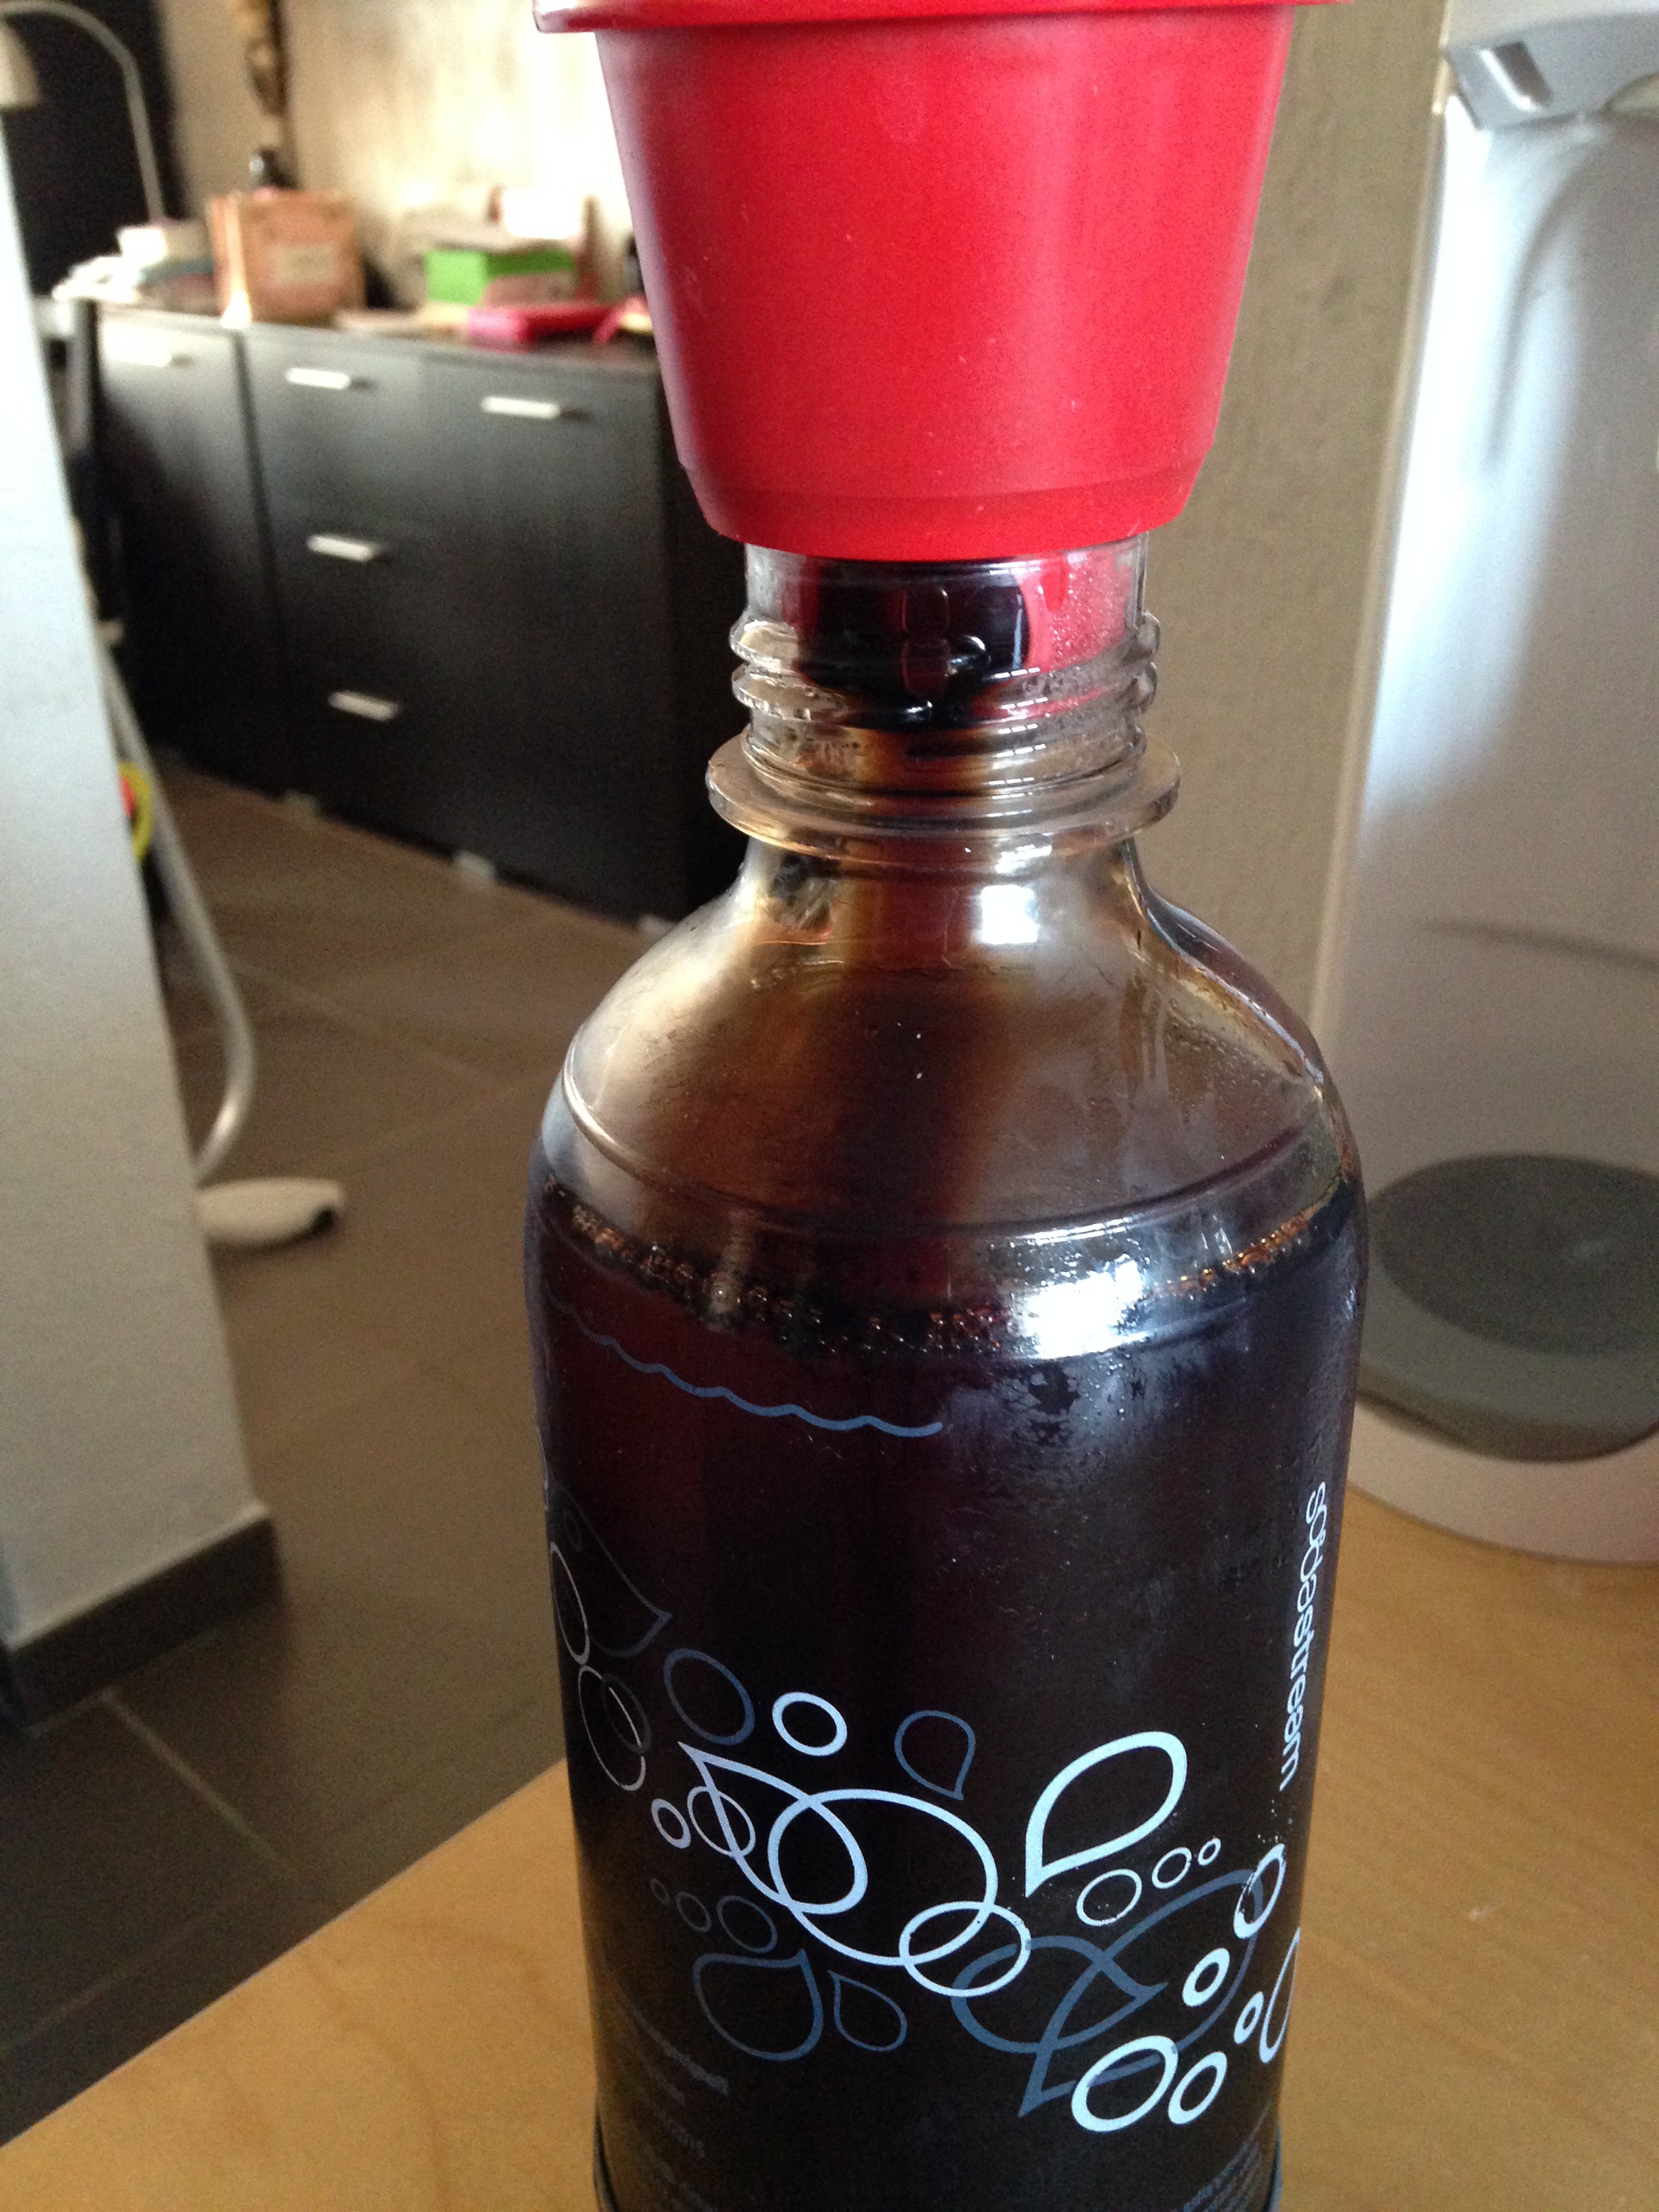 Cola Light Sans Sucres 500ml – Sodastream France